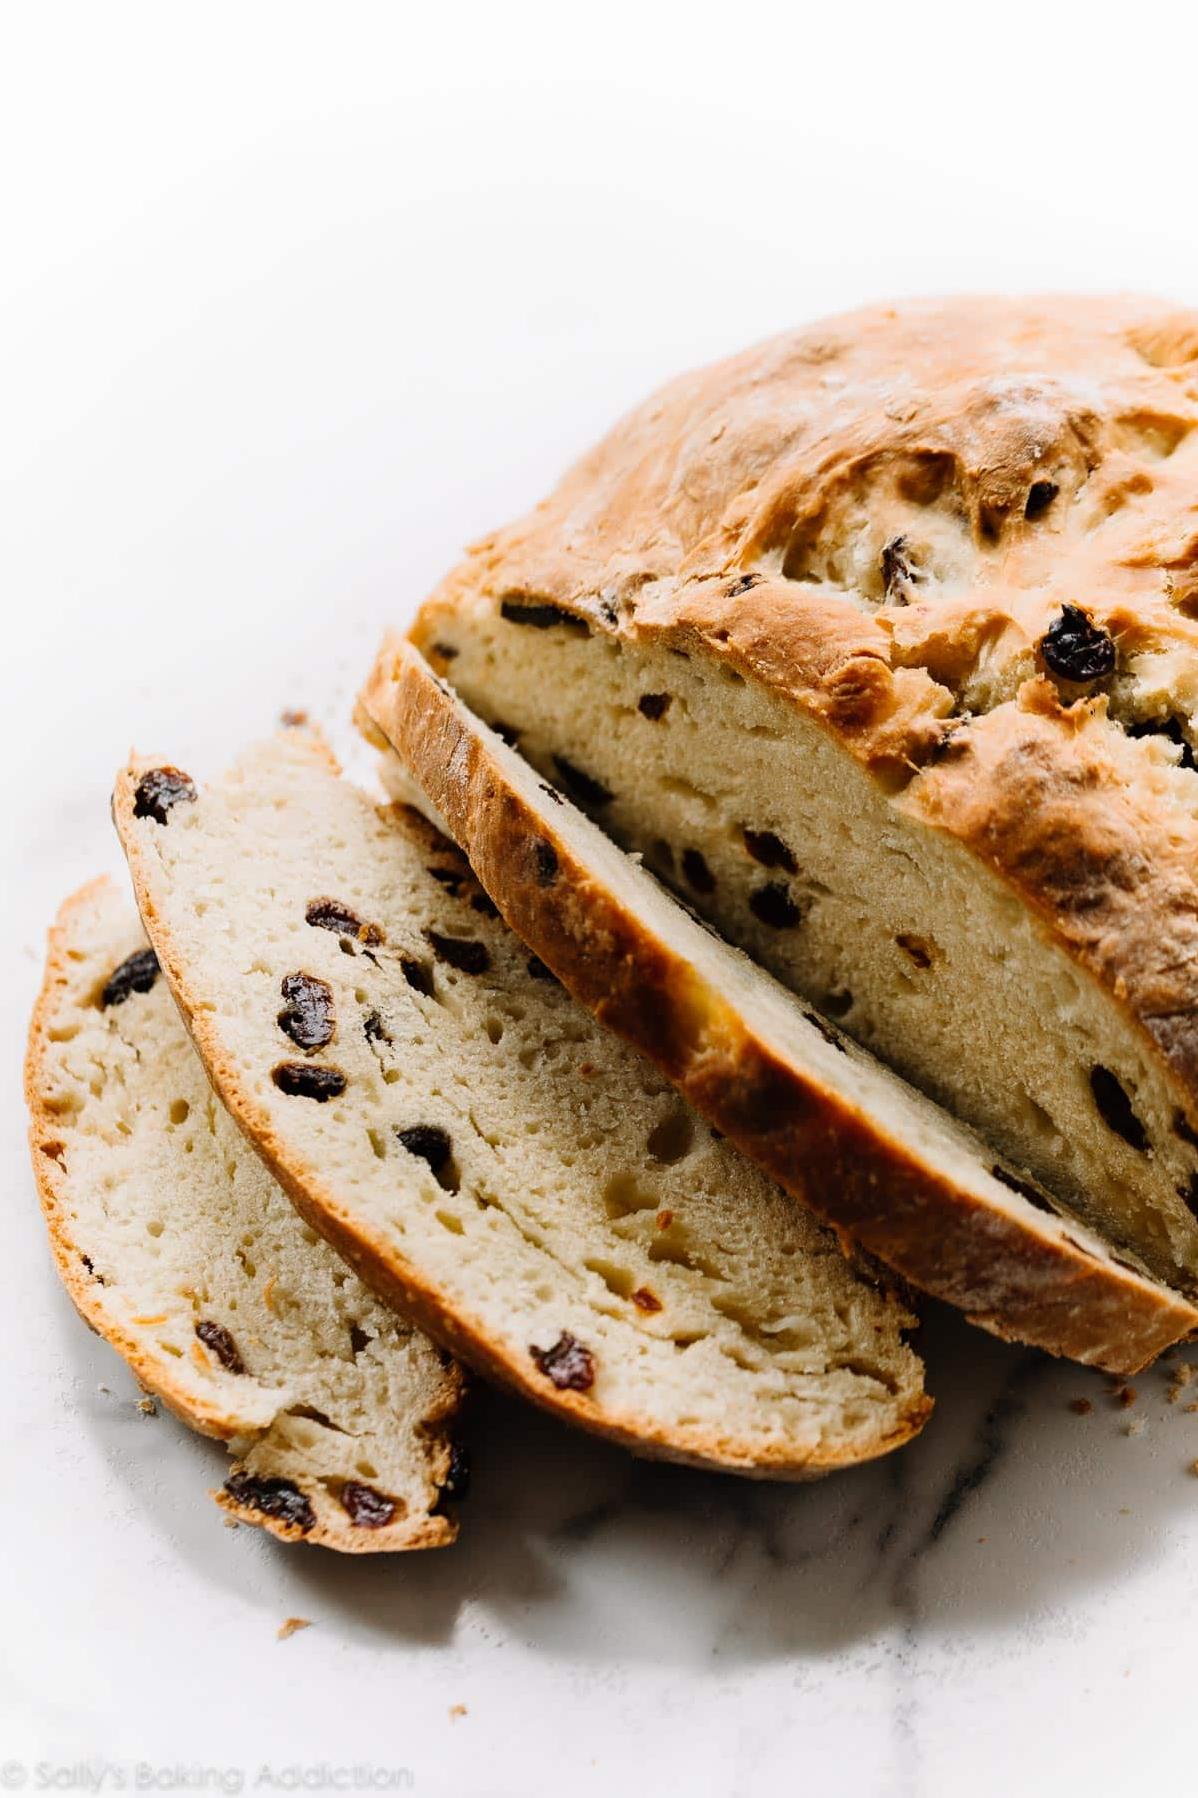  Say “raisins” and I’ll say “bread”.